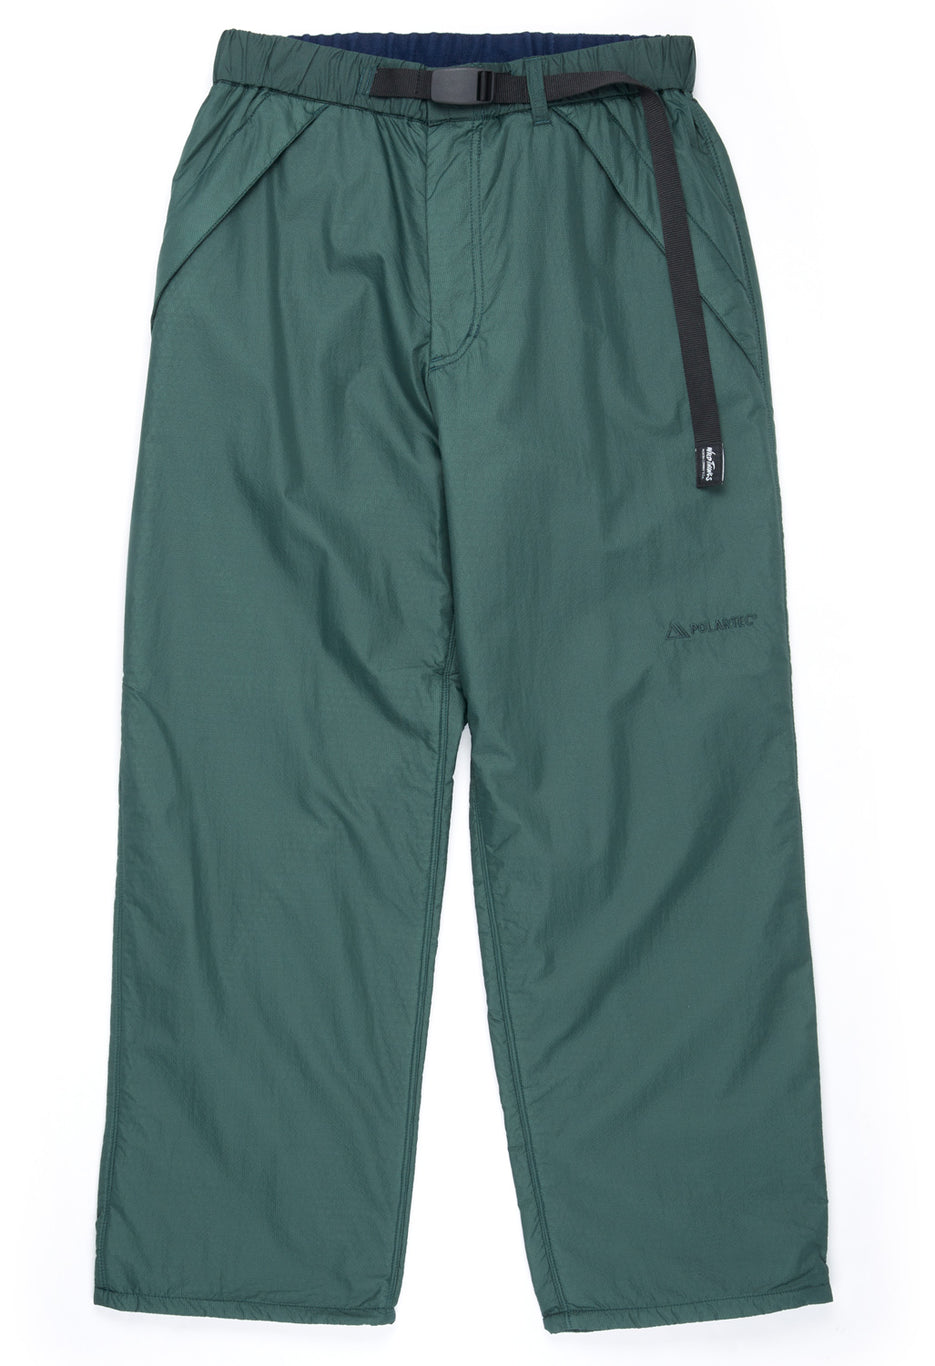 Wild Things Men's Polar Alpha Pants - Green